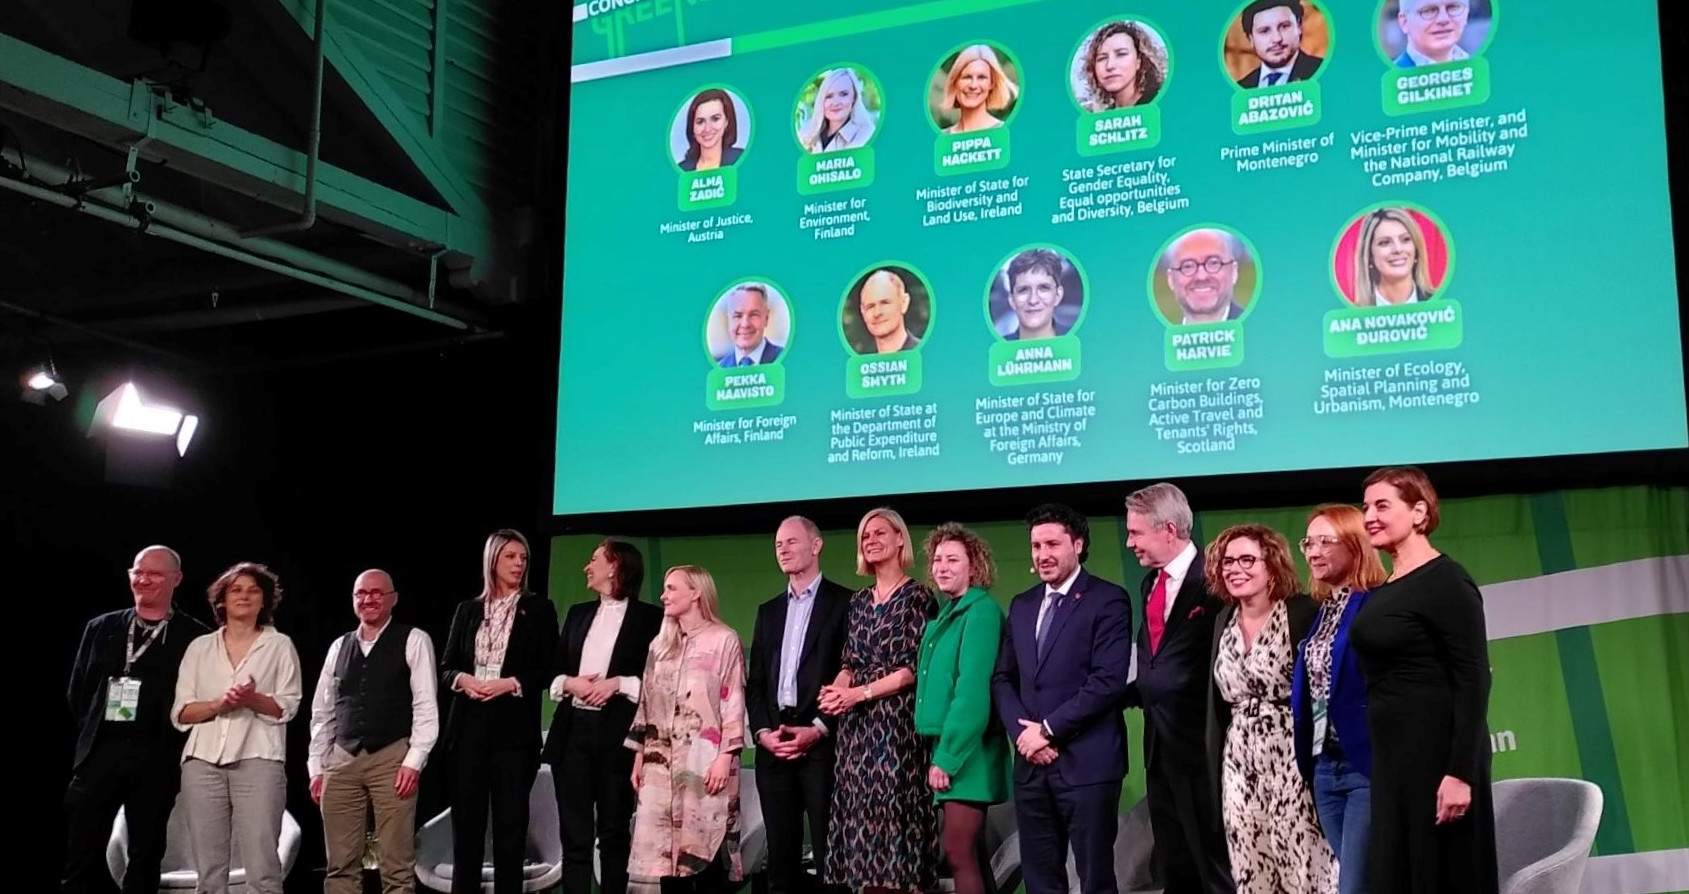 Familienfoto mit europäischen grünen Regierungsvertreter*innen auf dem Kongress der Europäischen Grünen Partei in Kopenhagen Anfang Dezember.